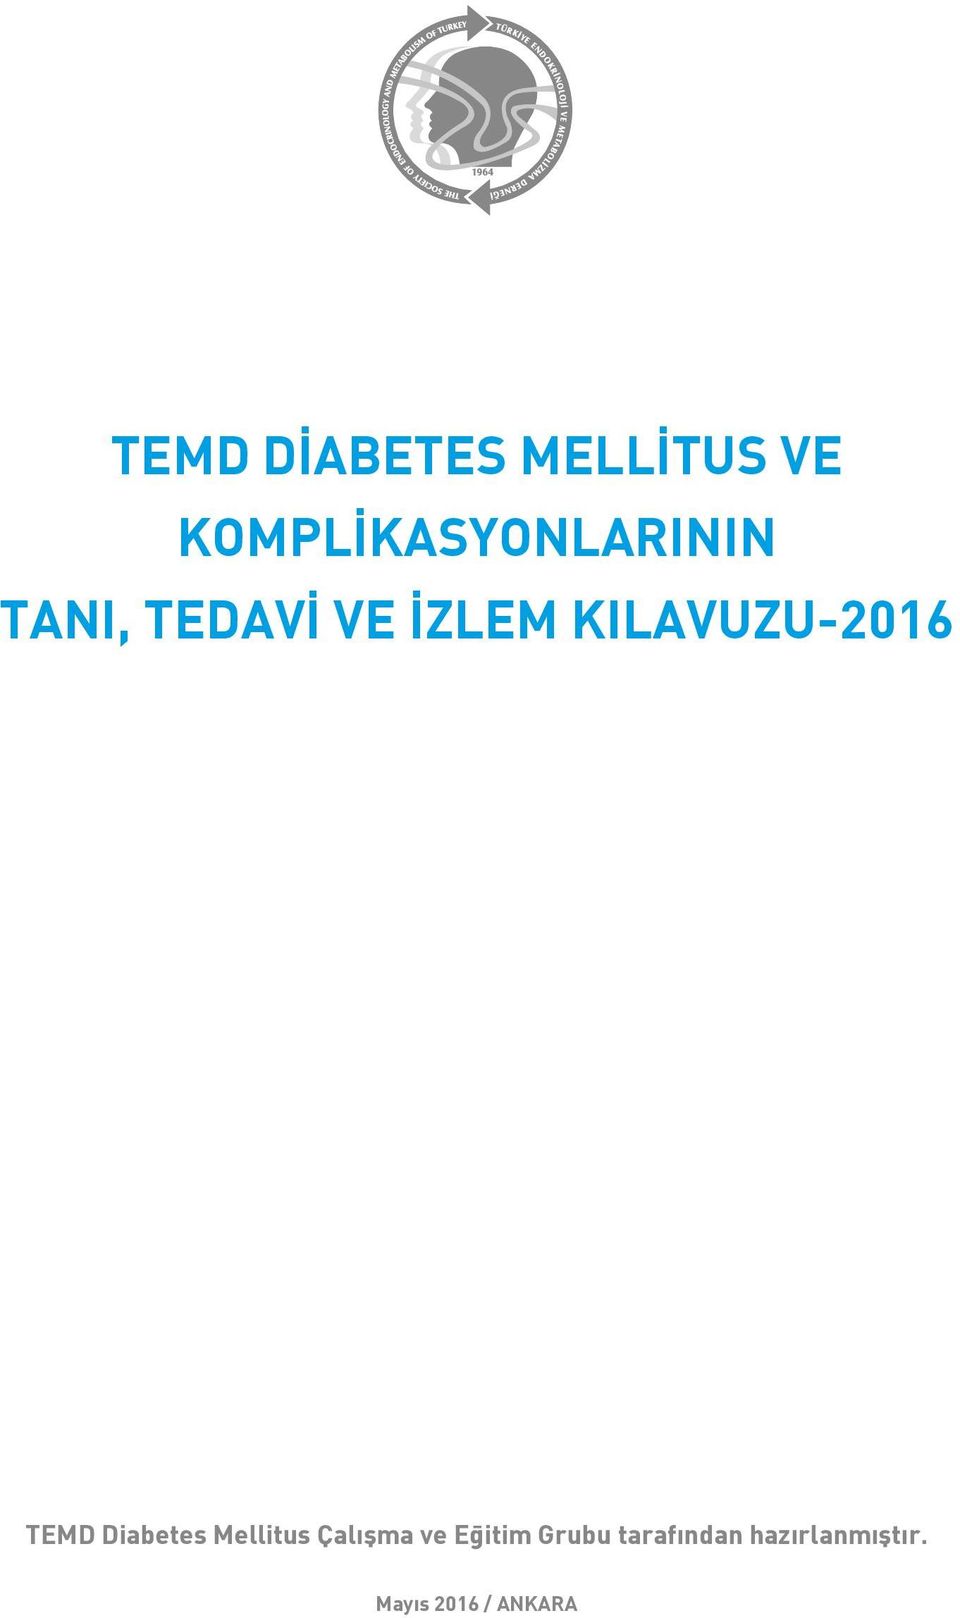 KILAVUZU-2016 TEMD Diabetes Mellitus